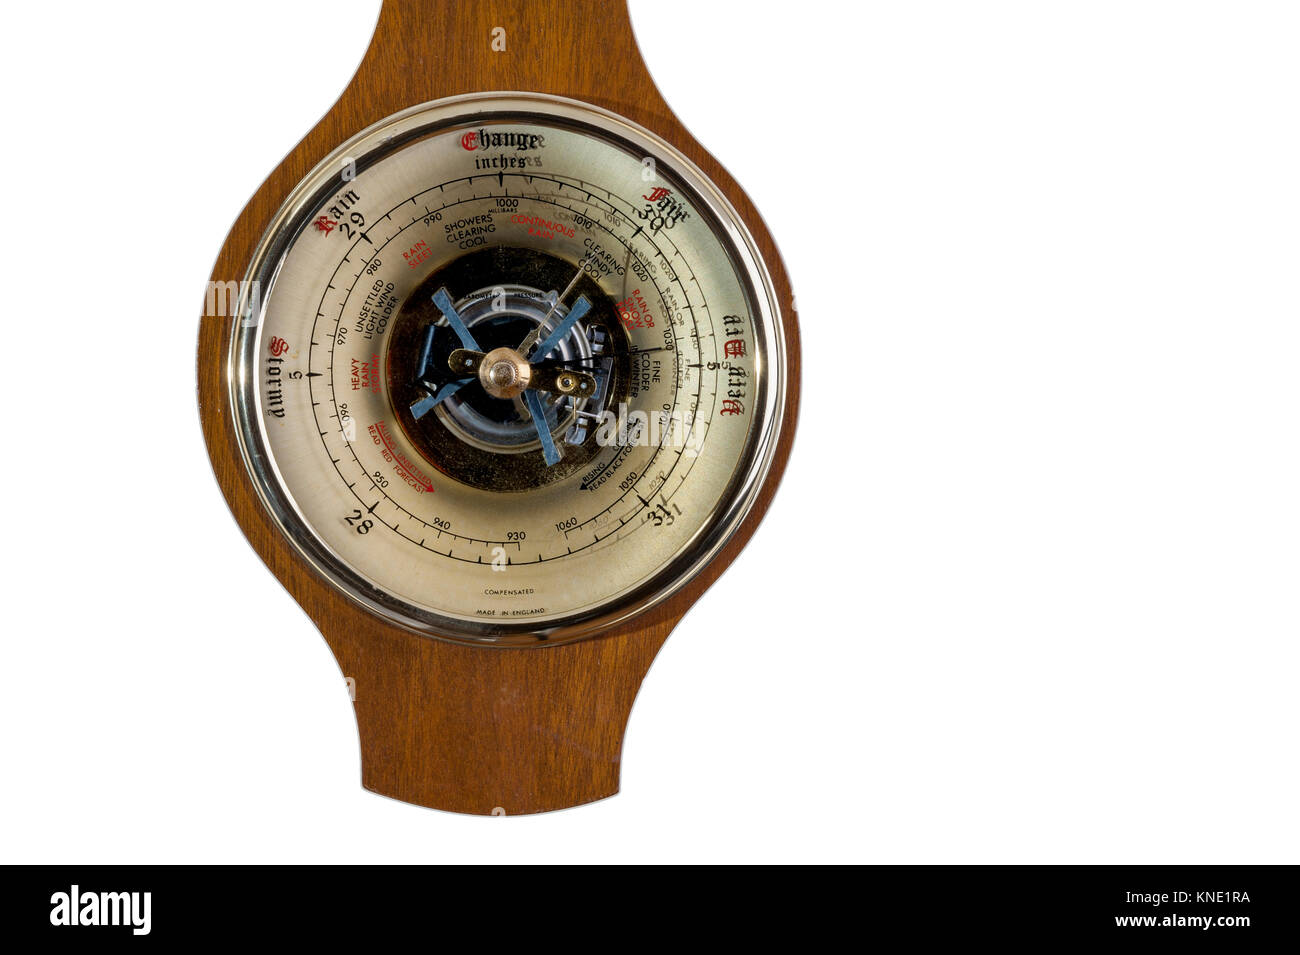 Old barometer, weather forecasting, vintage. Stock Photo